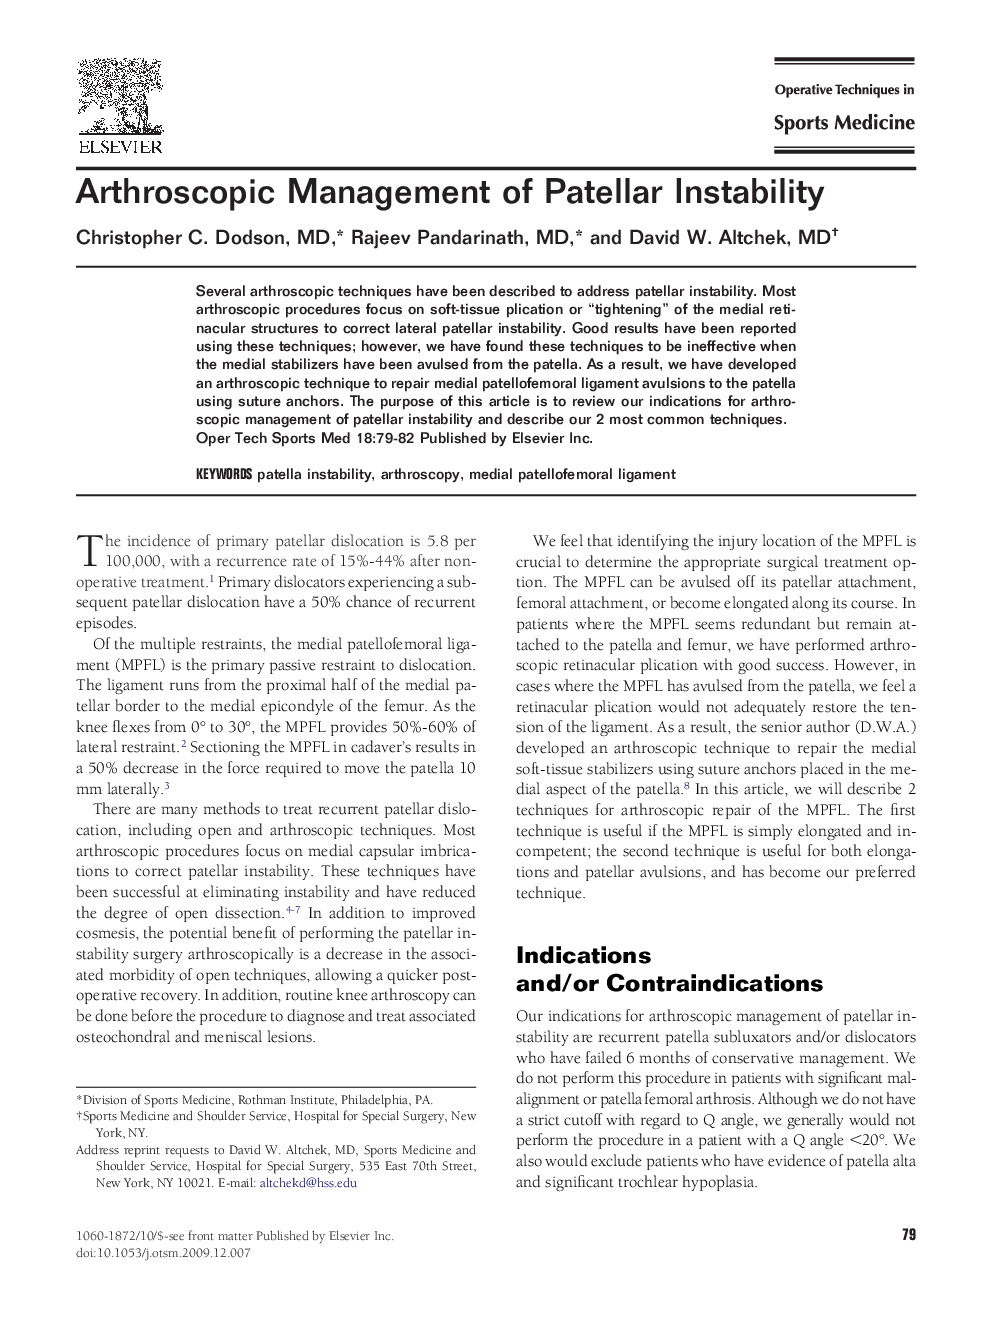 Arthroscopic Management of Patellar Instability